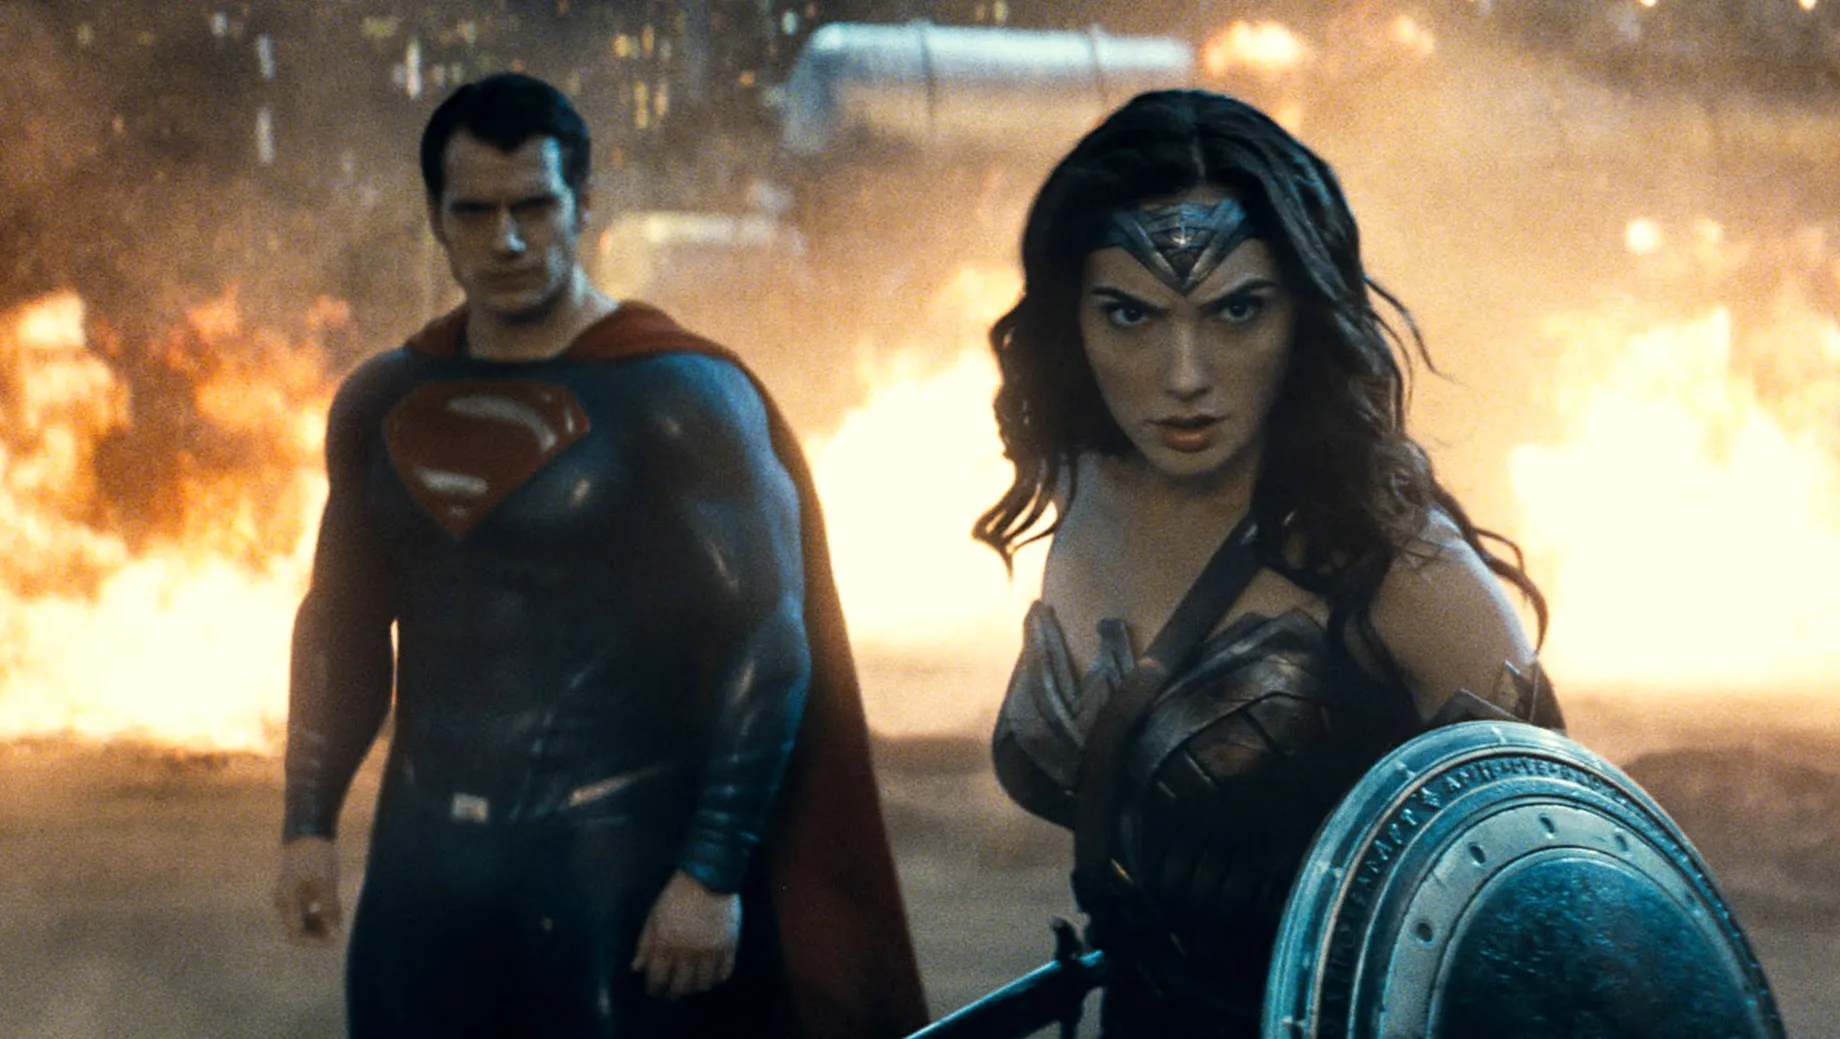 Henry Cavill as Superman and Gal Gadot as Wonder Woman